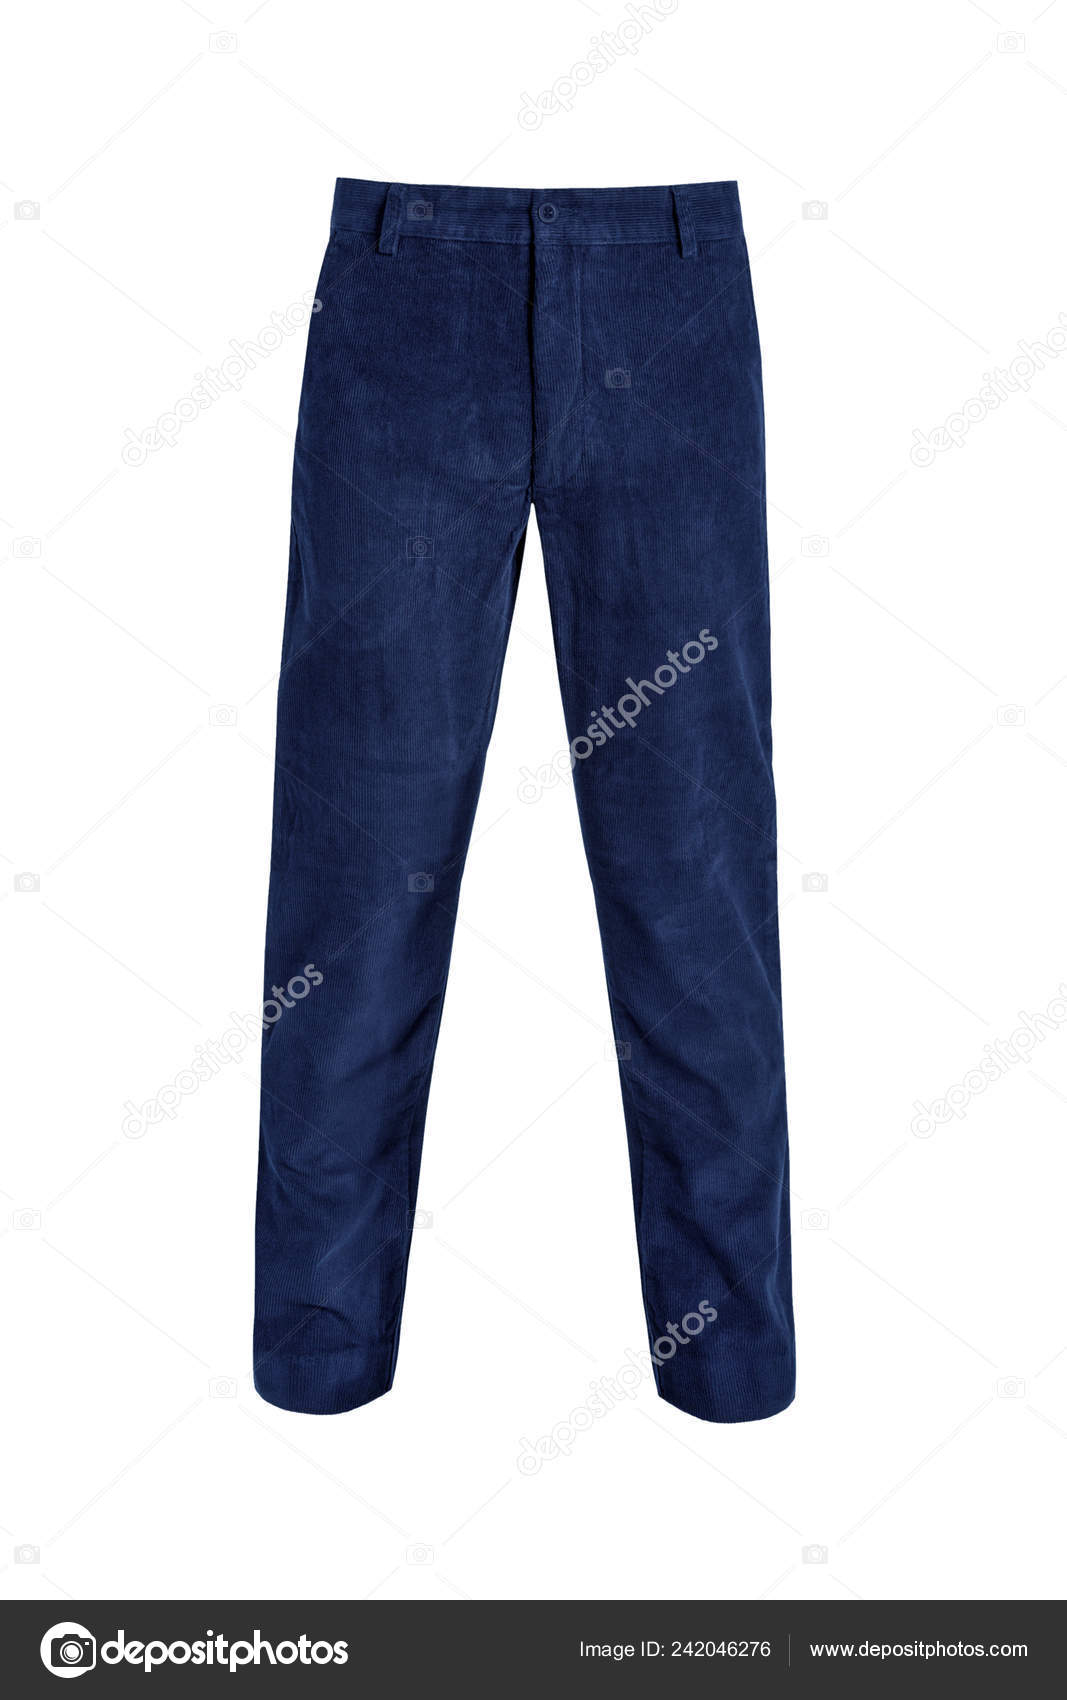 jeans blue navy